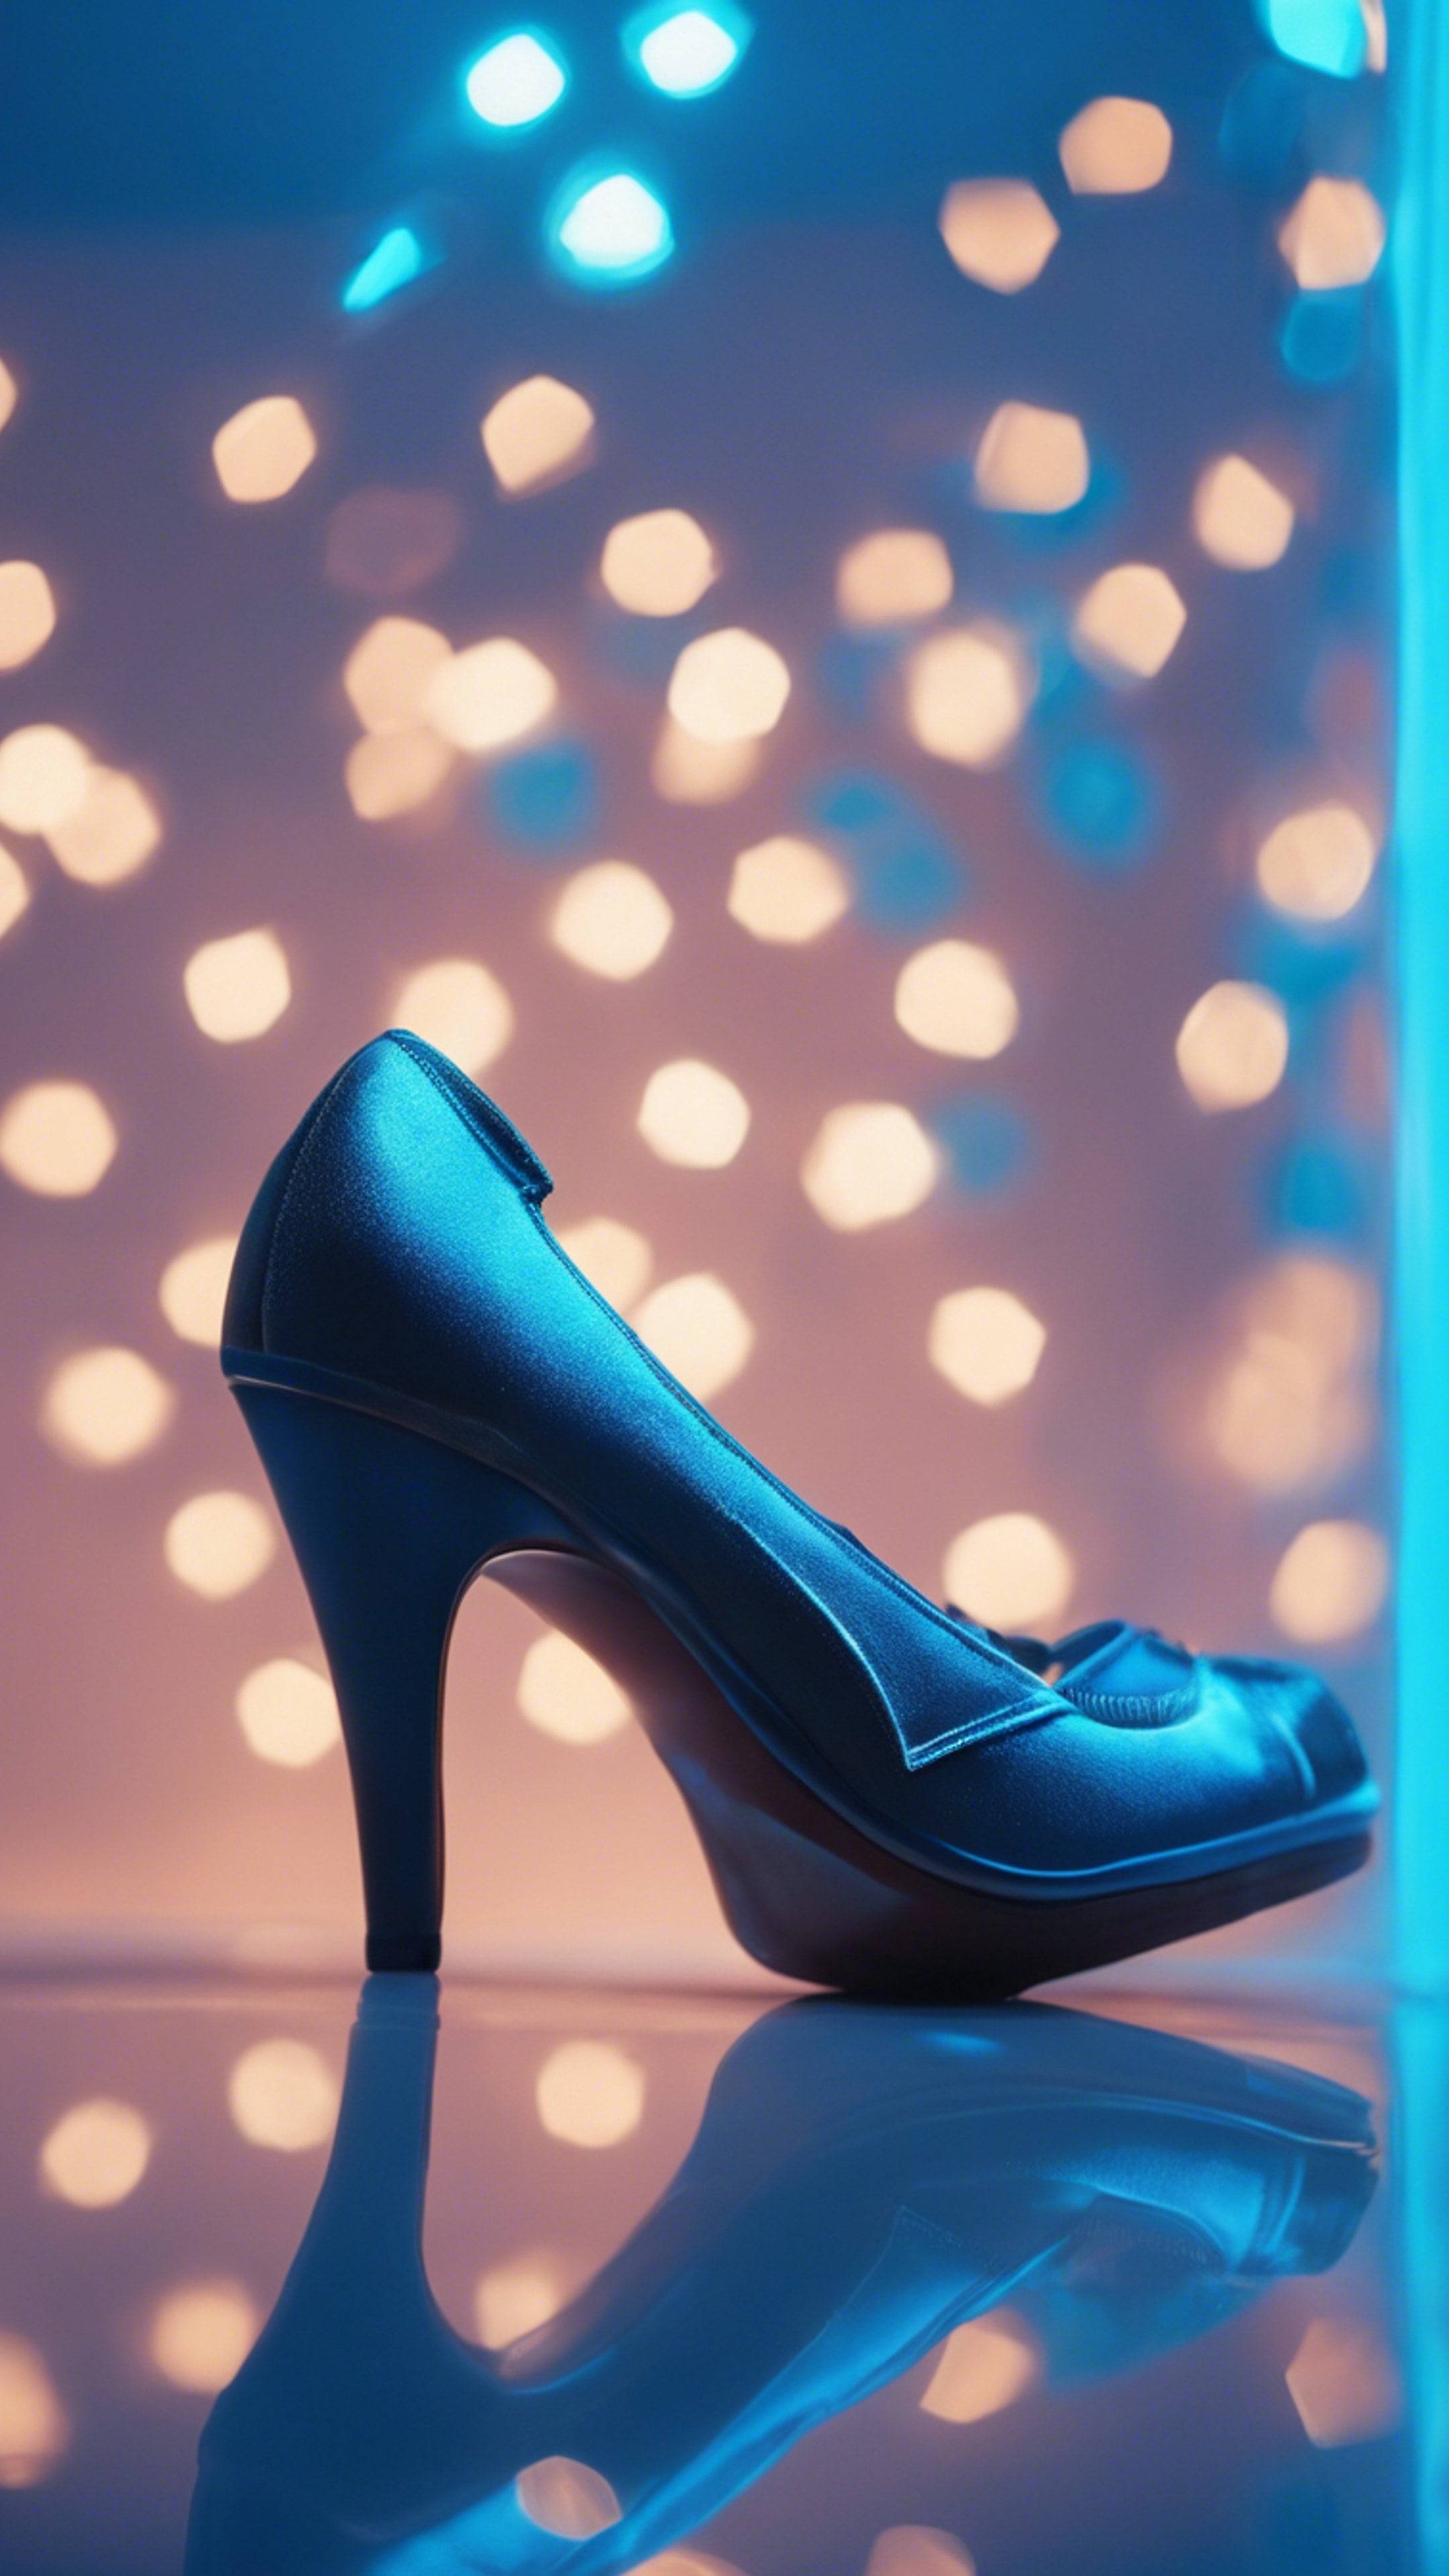 A pair of elegant high heel shoes, bathed in an intense neon blue light. Wallpaper[0048cf25eada48699f01]